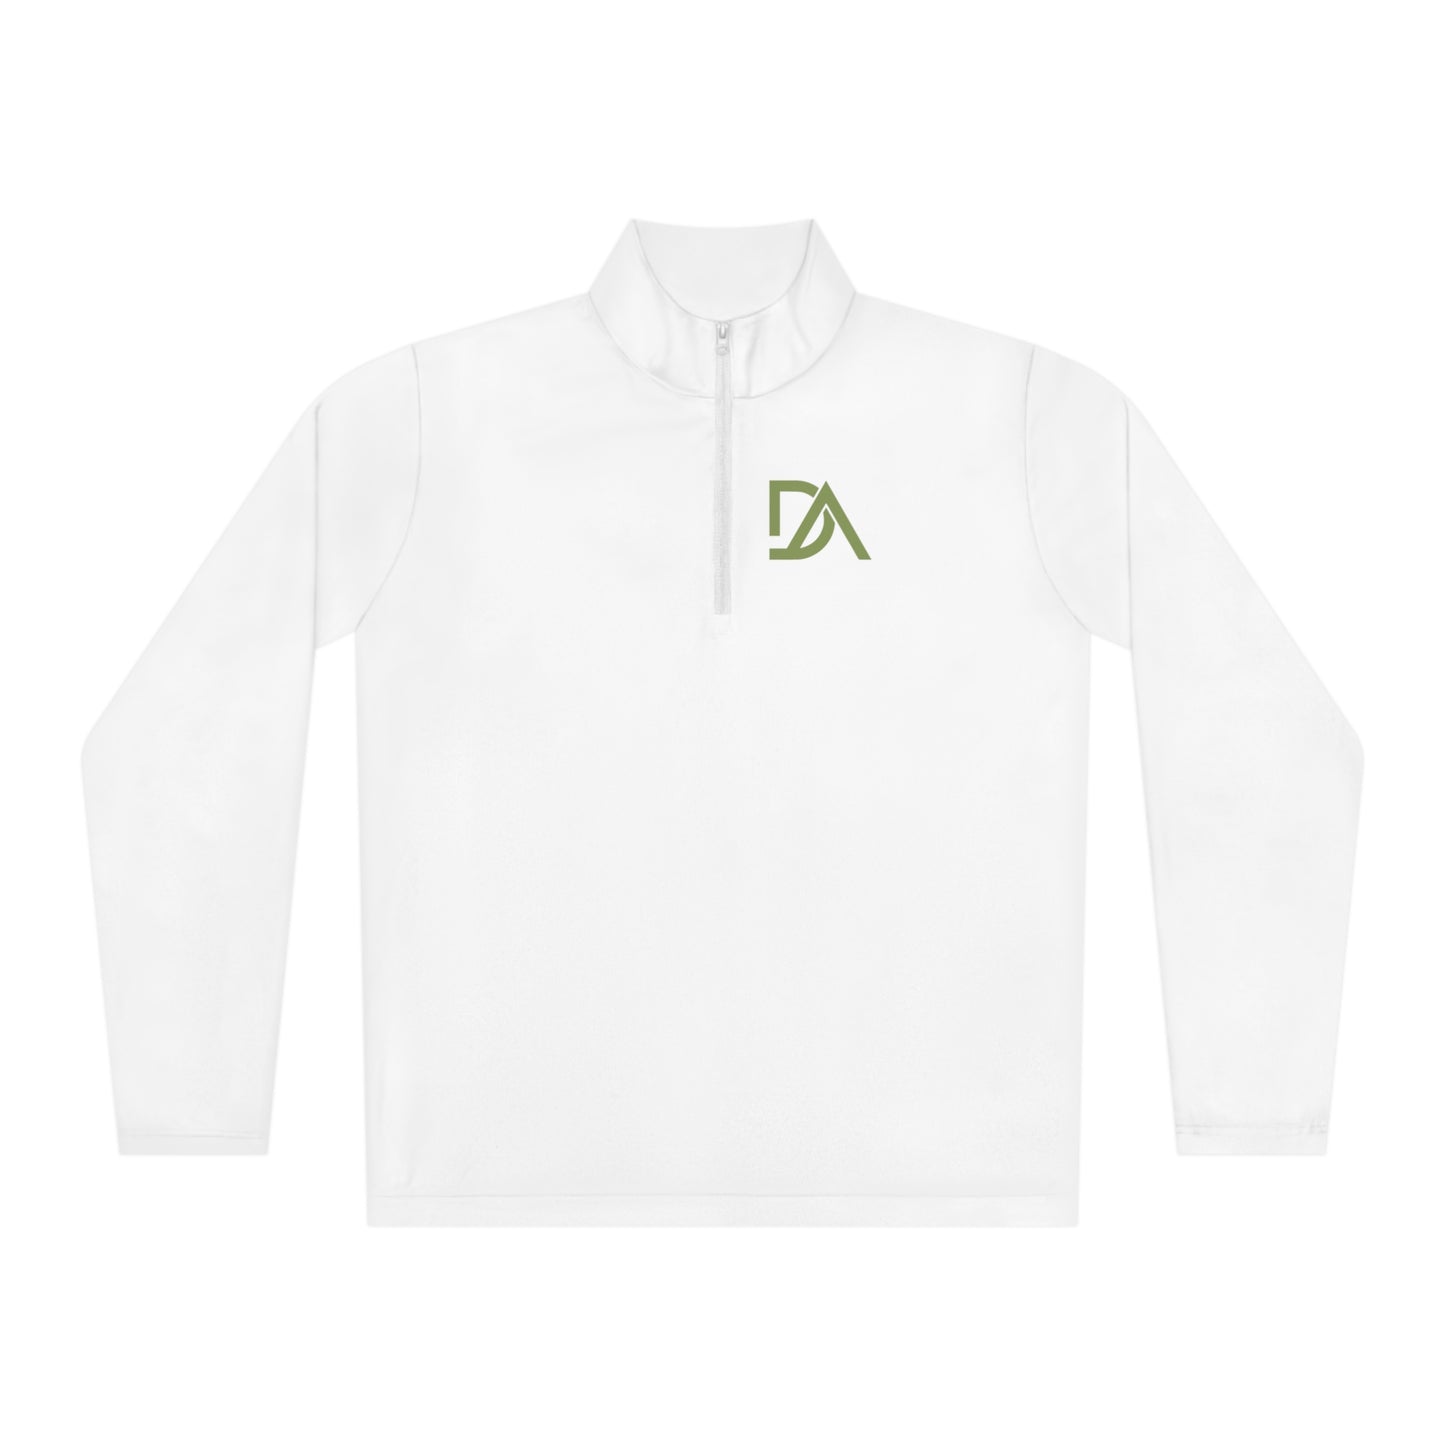 D.A Unisex Quarter-Zip Pullover